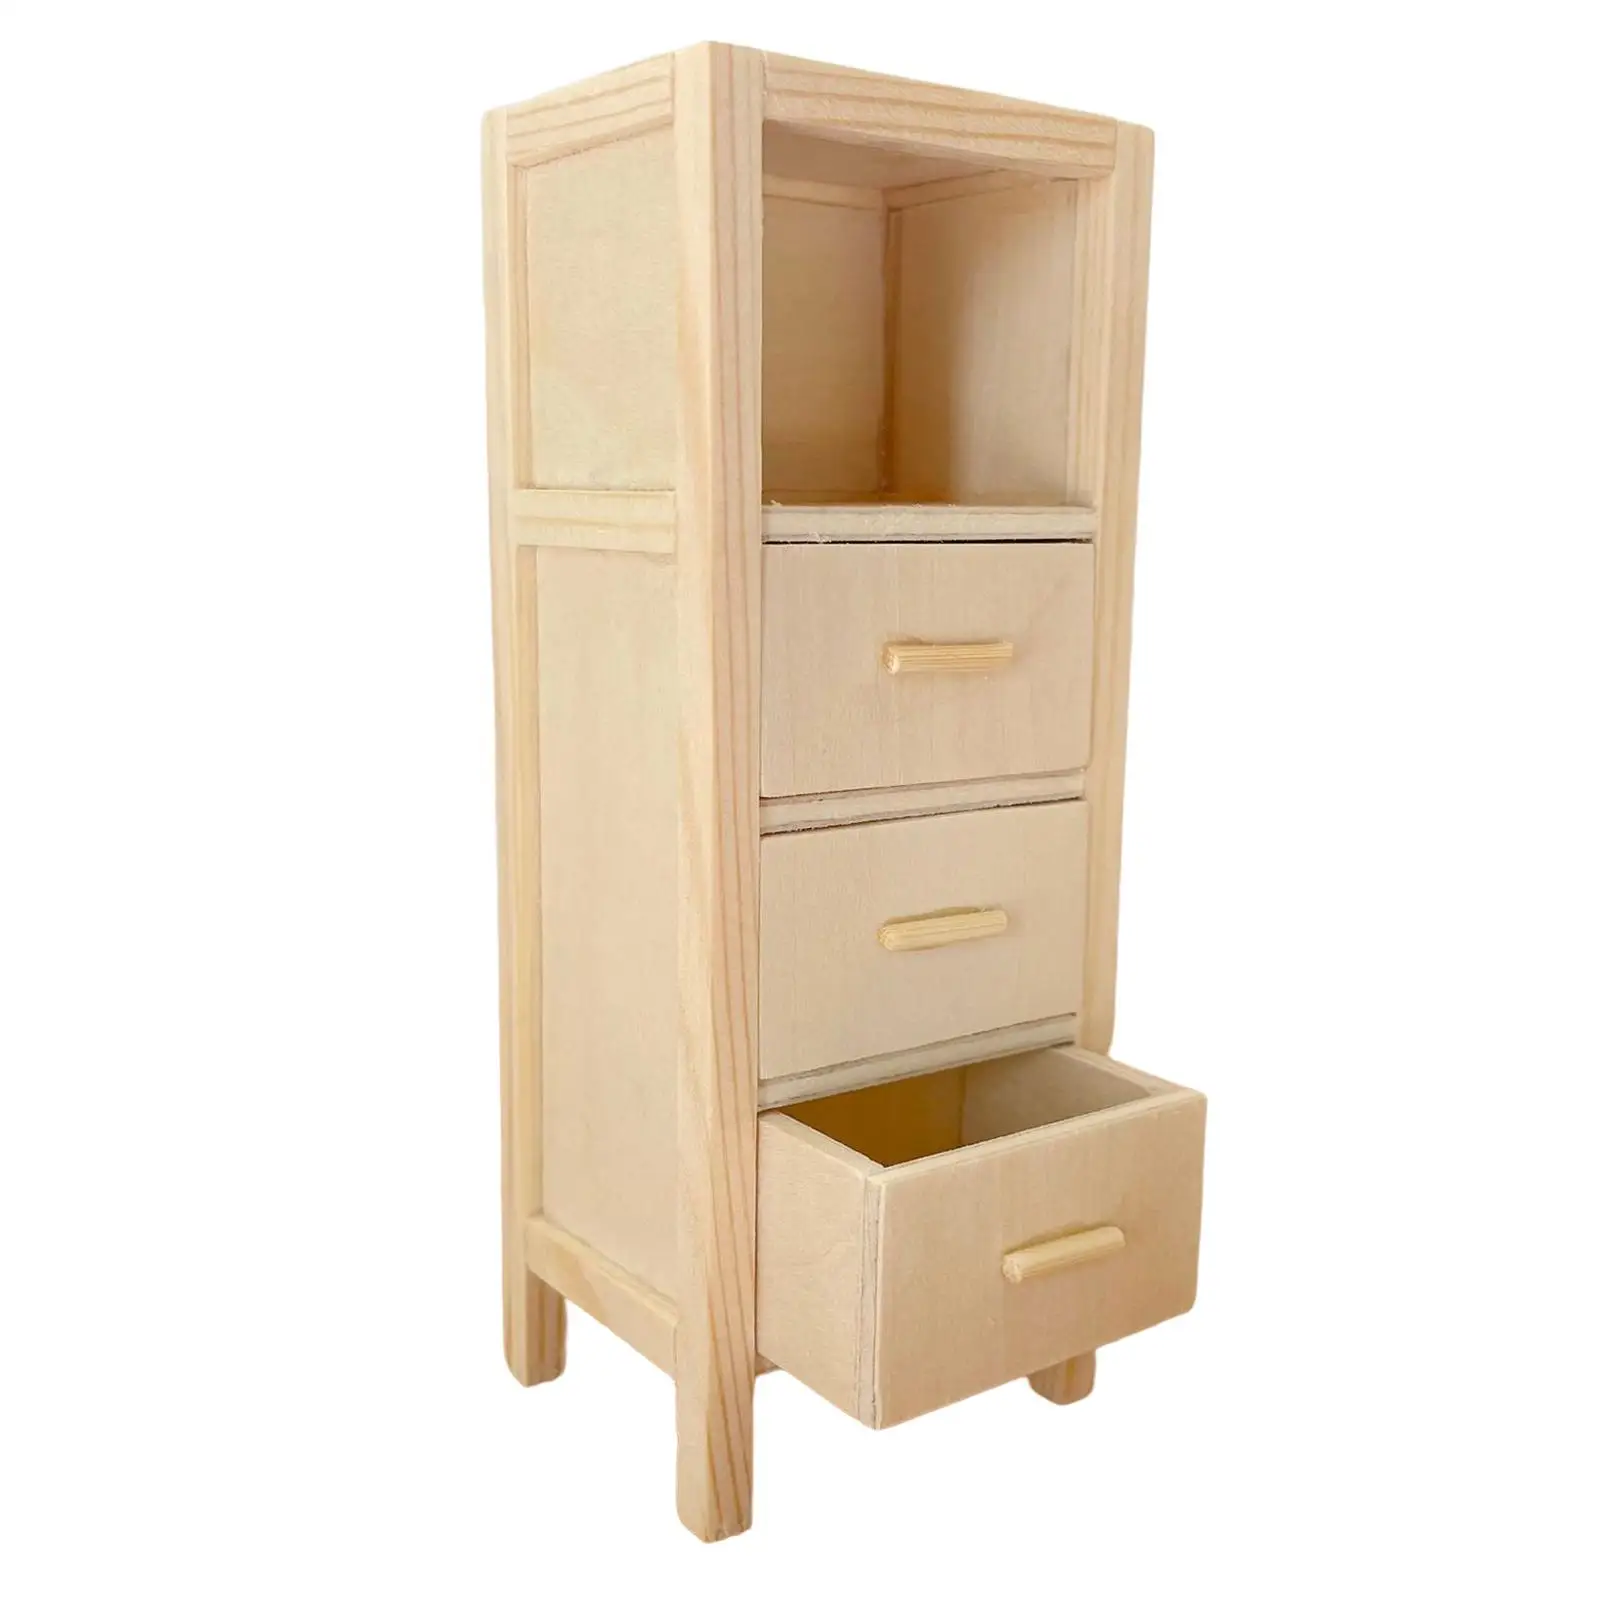 Dollhouse Cabinet Pretend Toy Cabinet Storage Cabinet Shelf Dollhouse Miniature Furniture Accessory for 1:12 Dollhouse Supplies